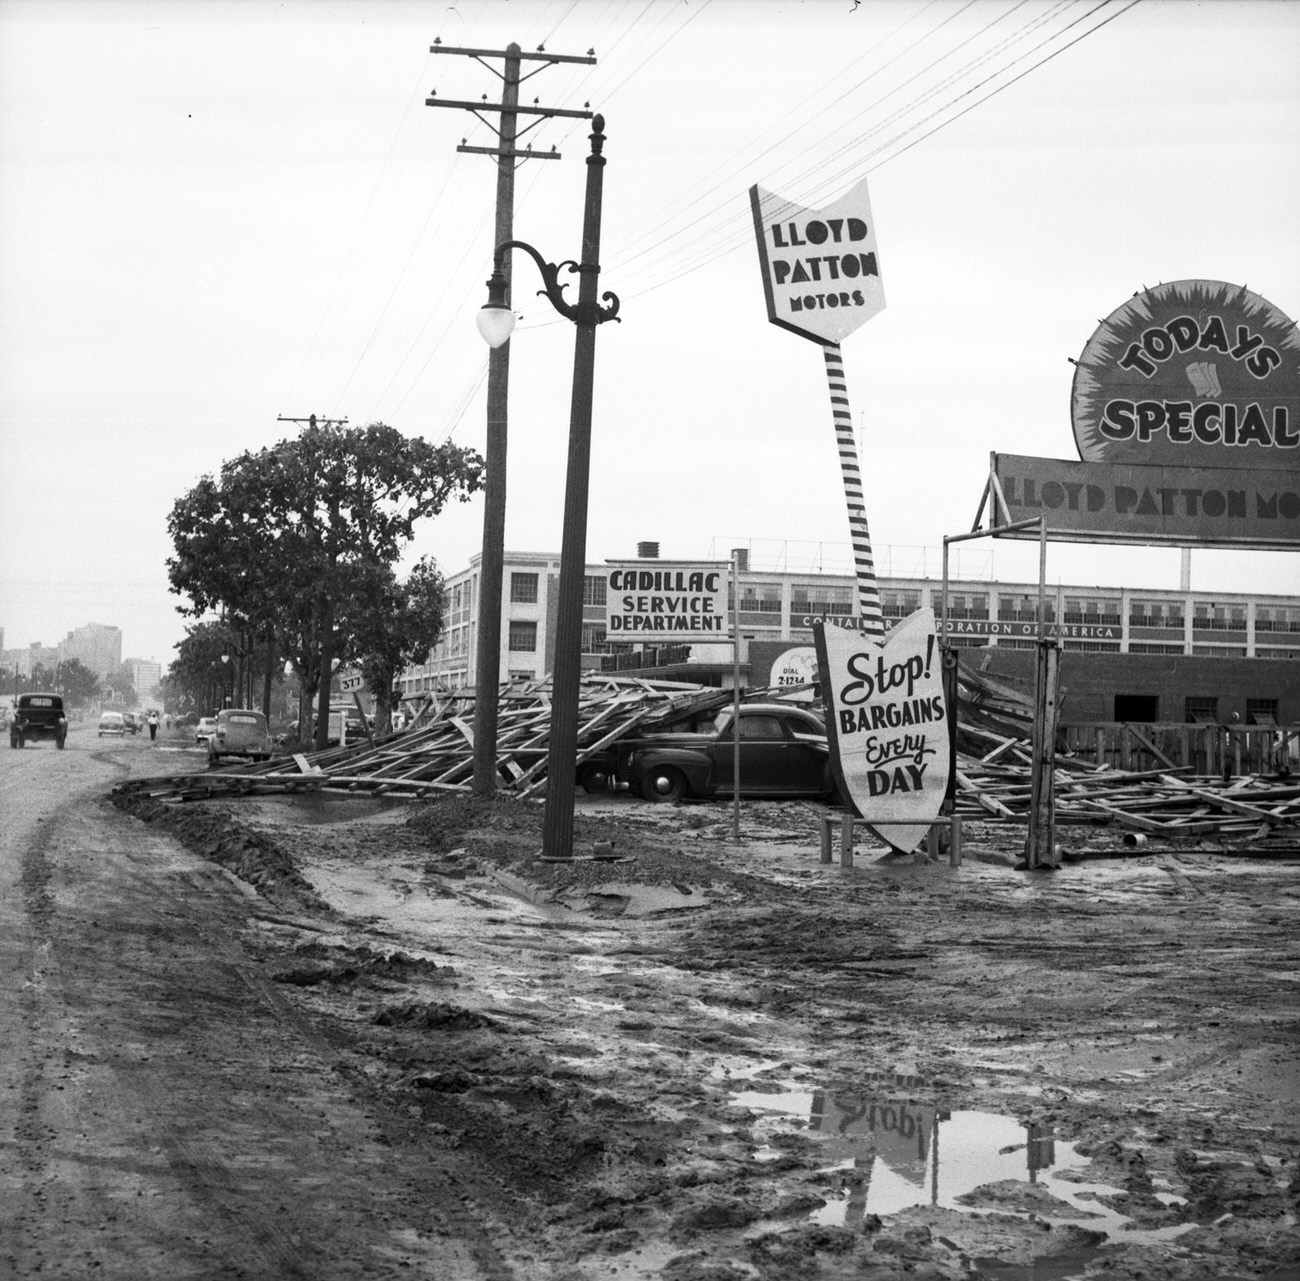 Lloyd Patton Motors after flood, 1949